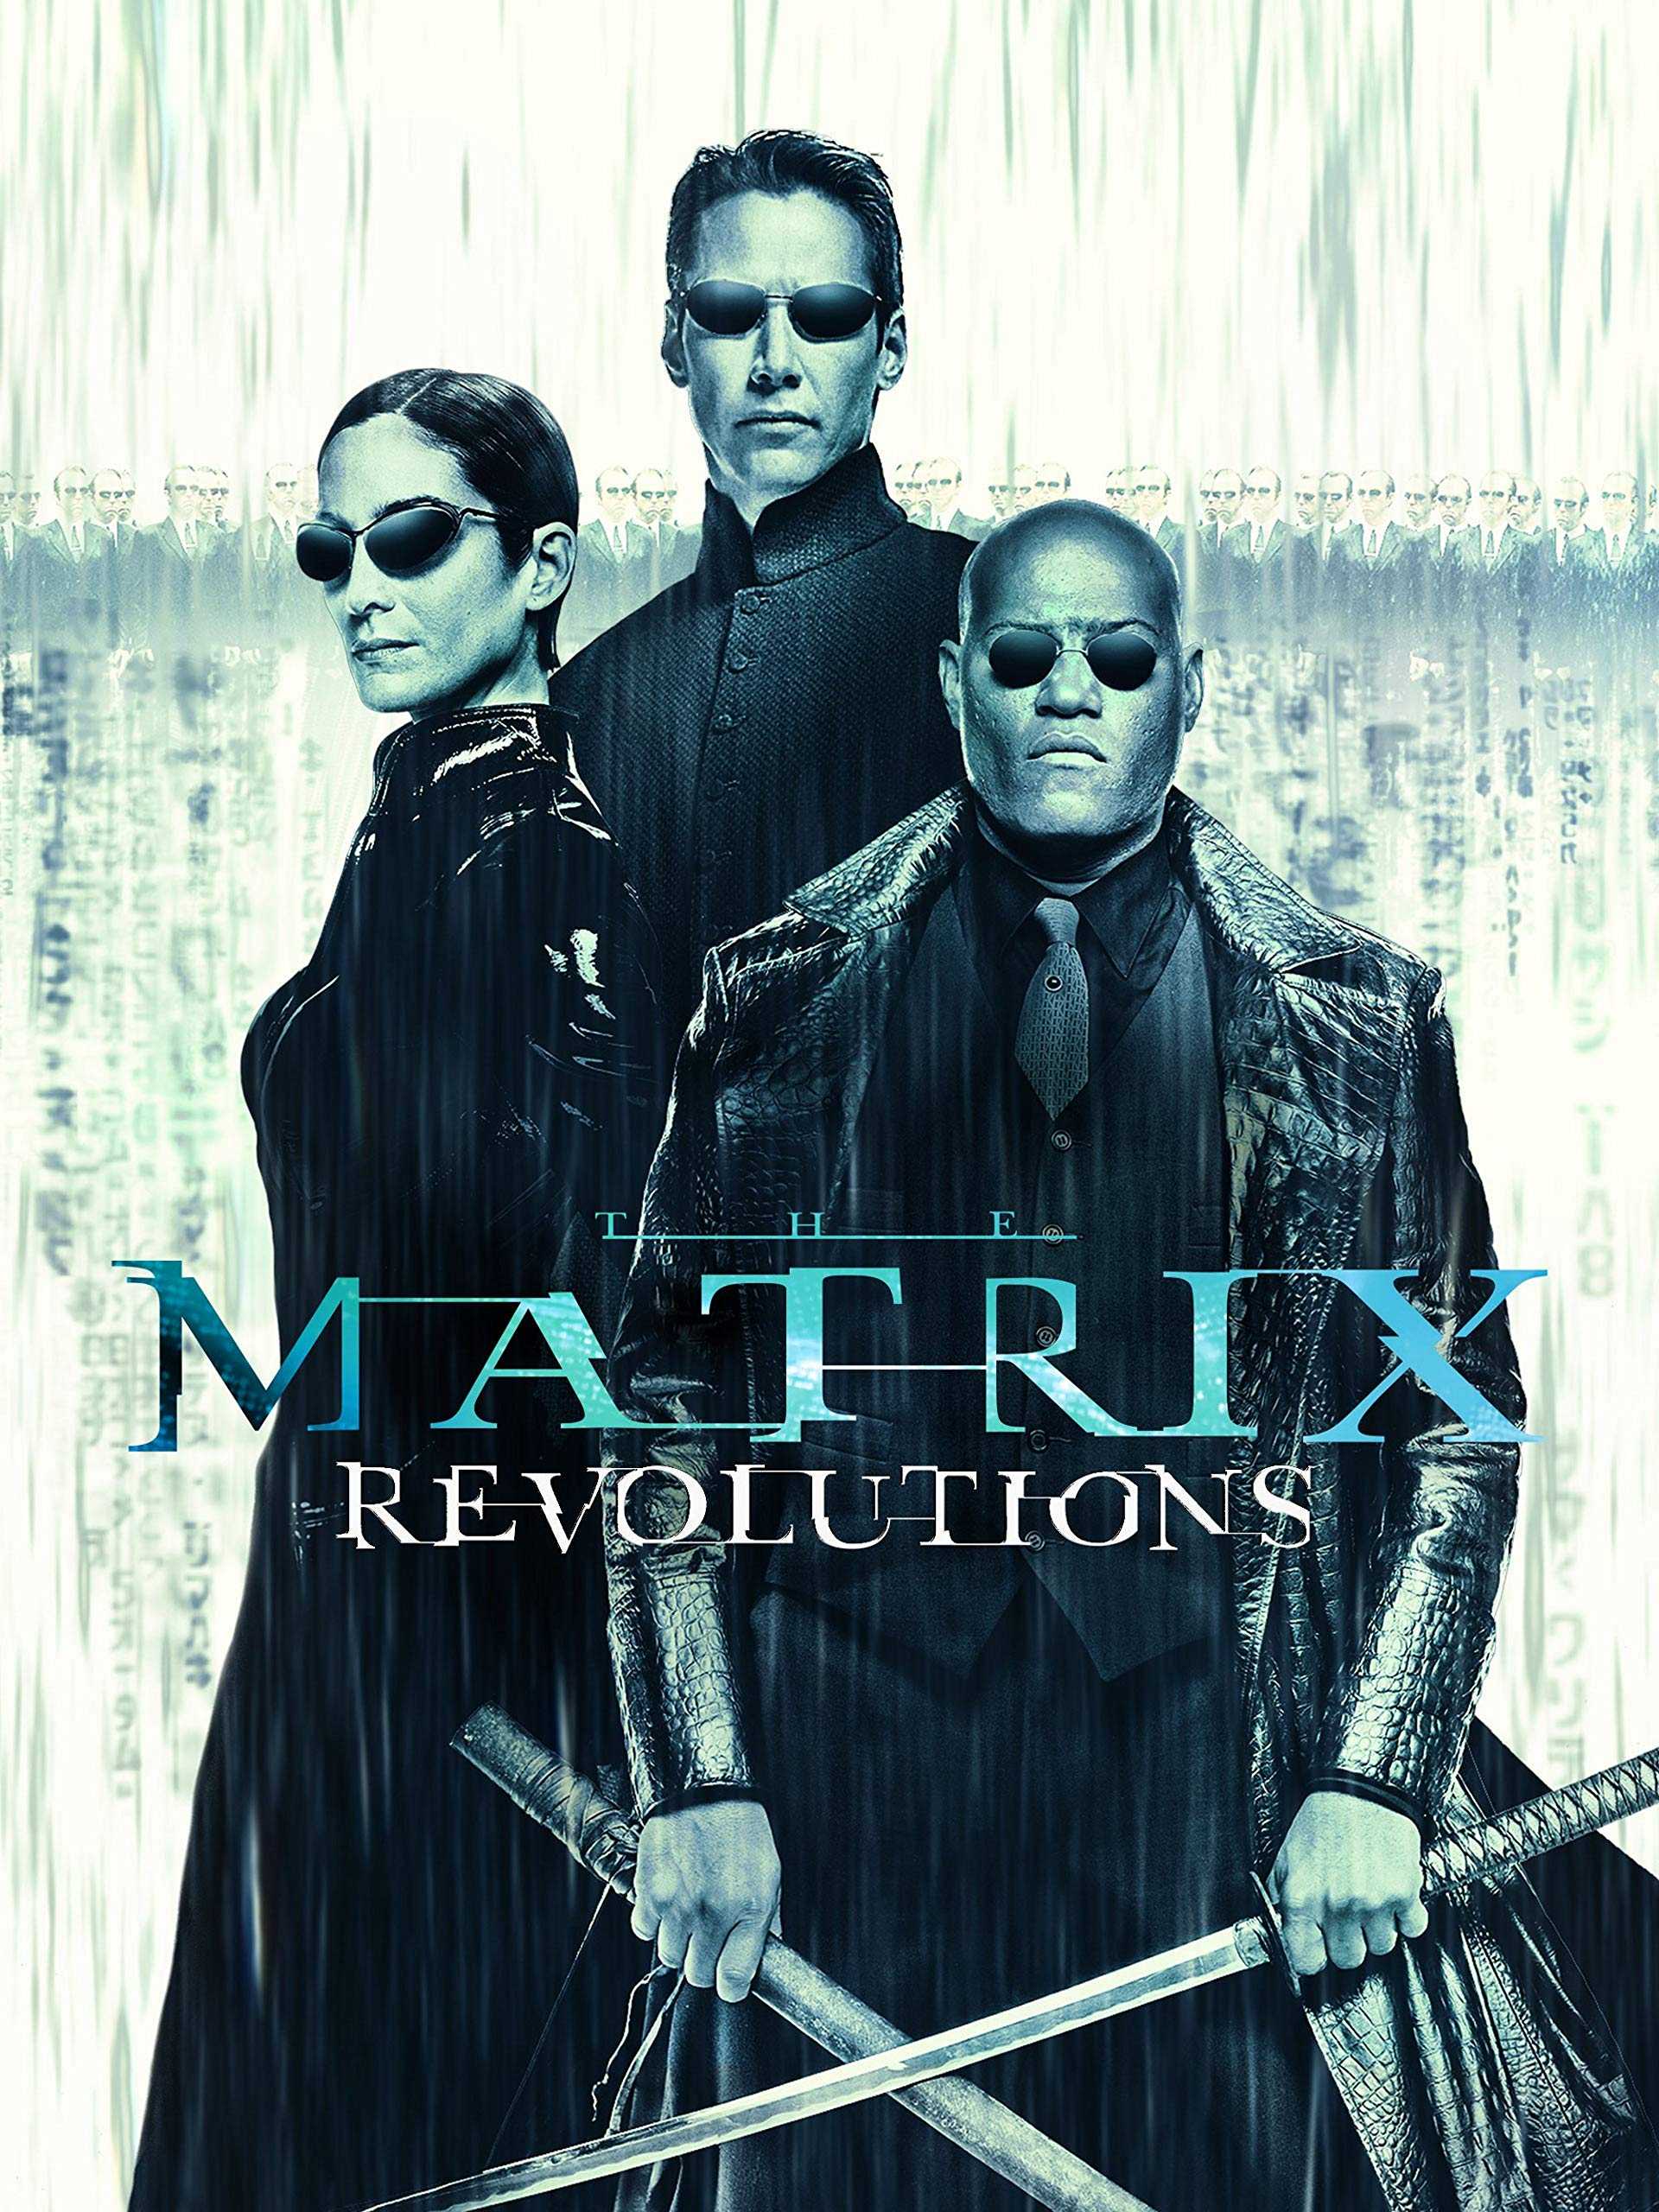 Матрица: революция (2003): кадры, трейлер, отзывы, фильм